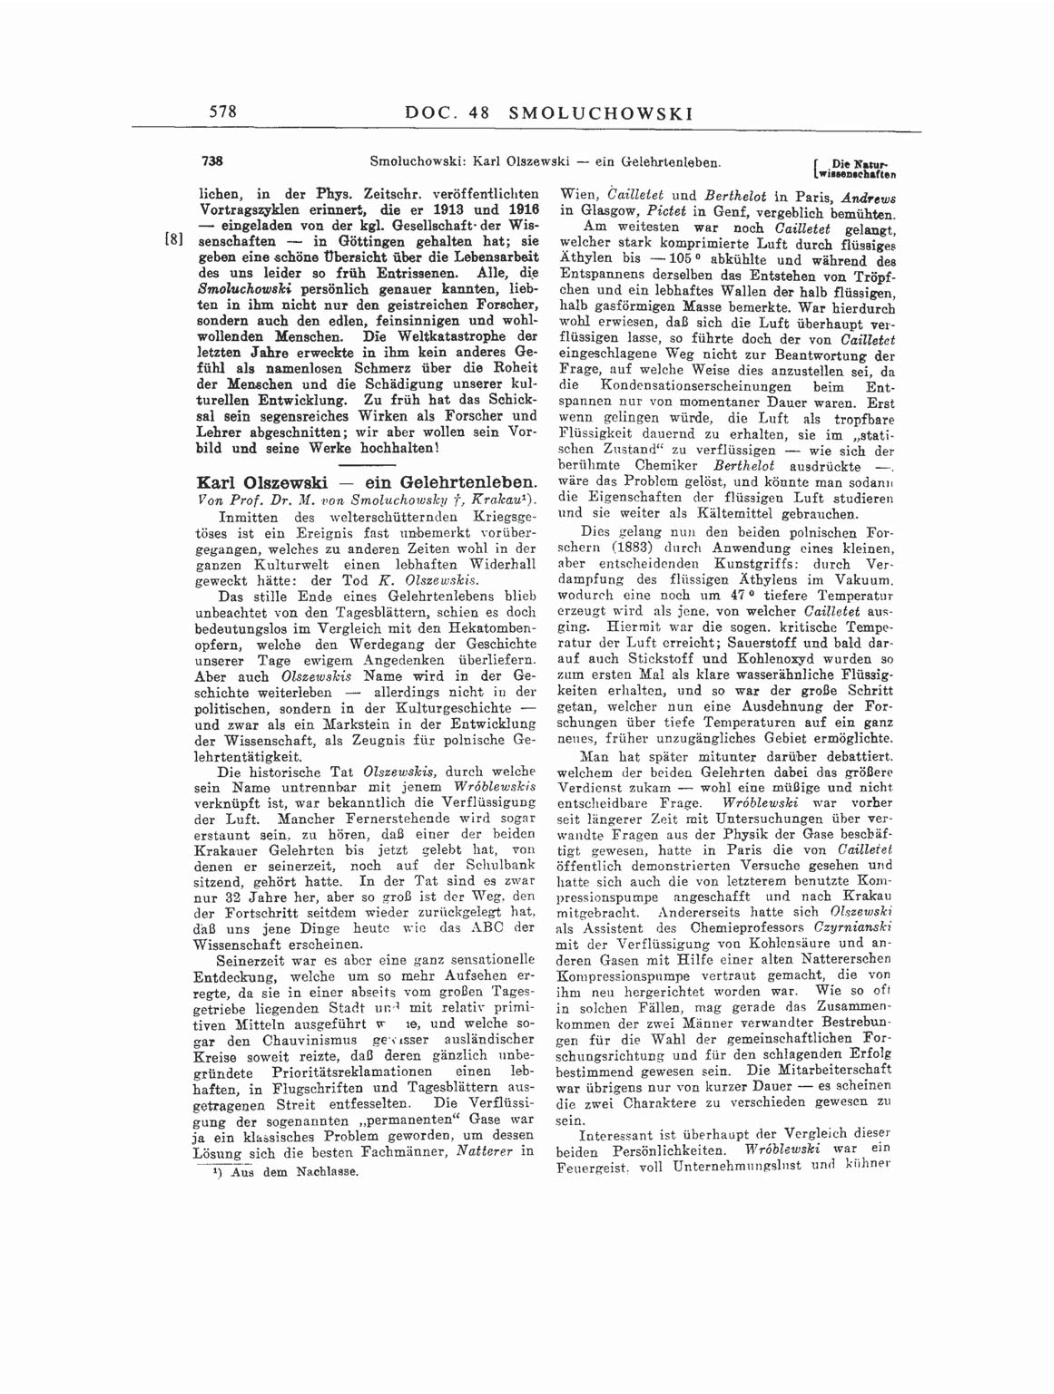 Volume 6: The Berlin Years: Writings, 1914-1917 page 578